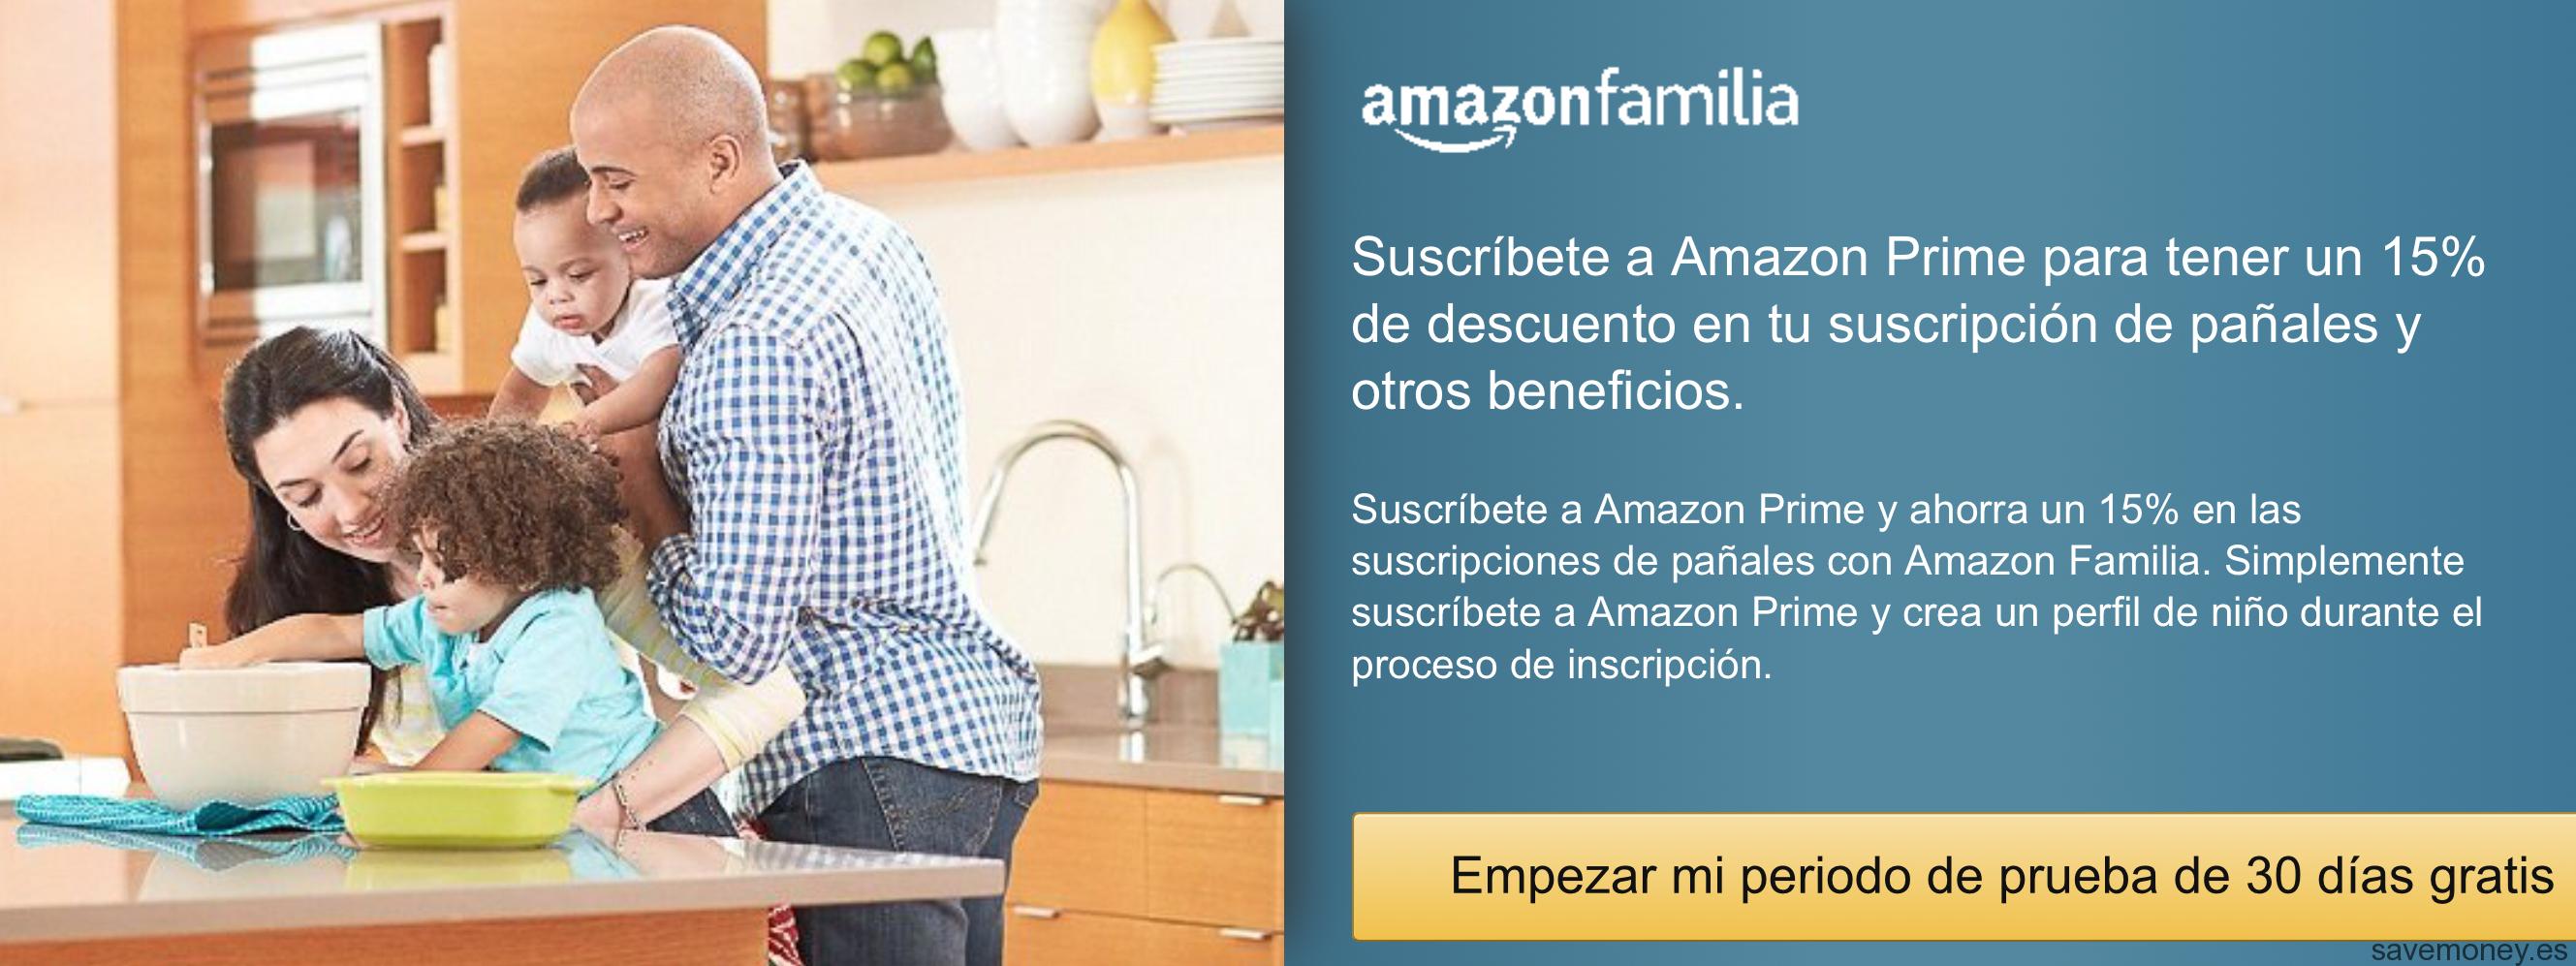 Novedades Amazon: Amazon Prime te permite crear un perfil de tu hijo